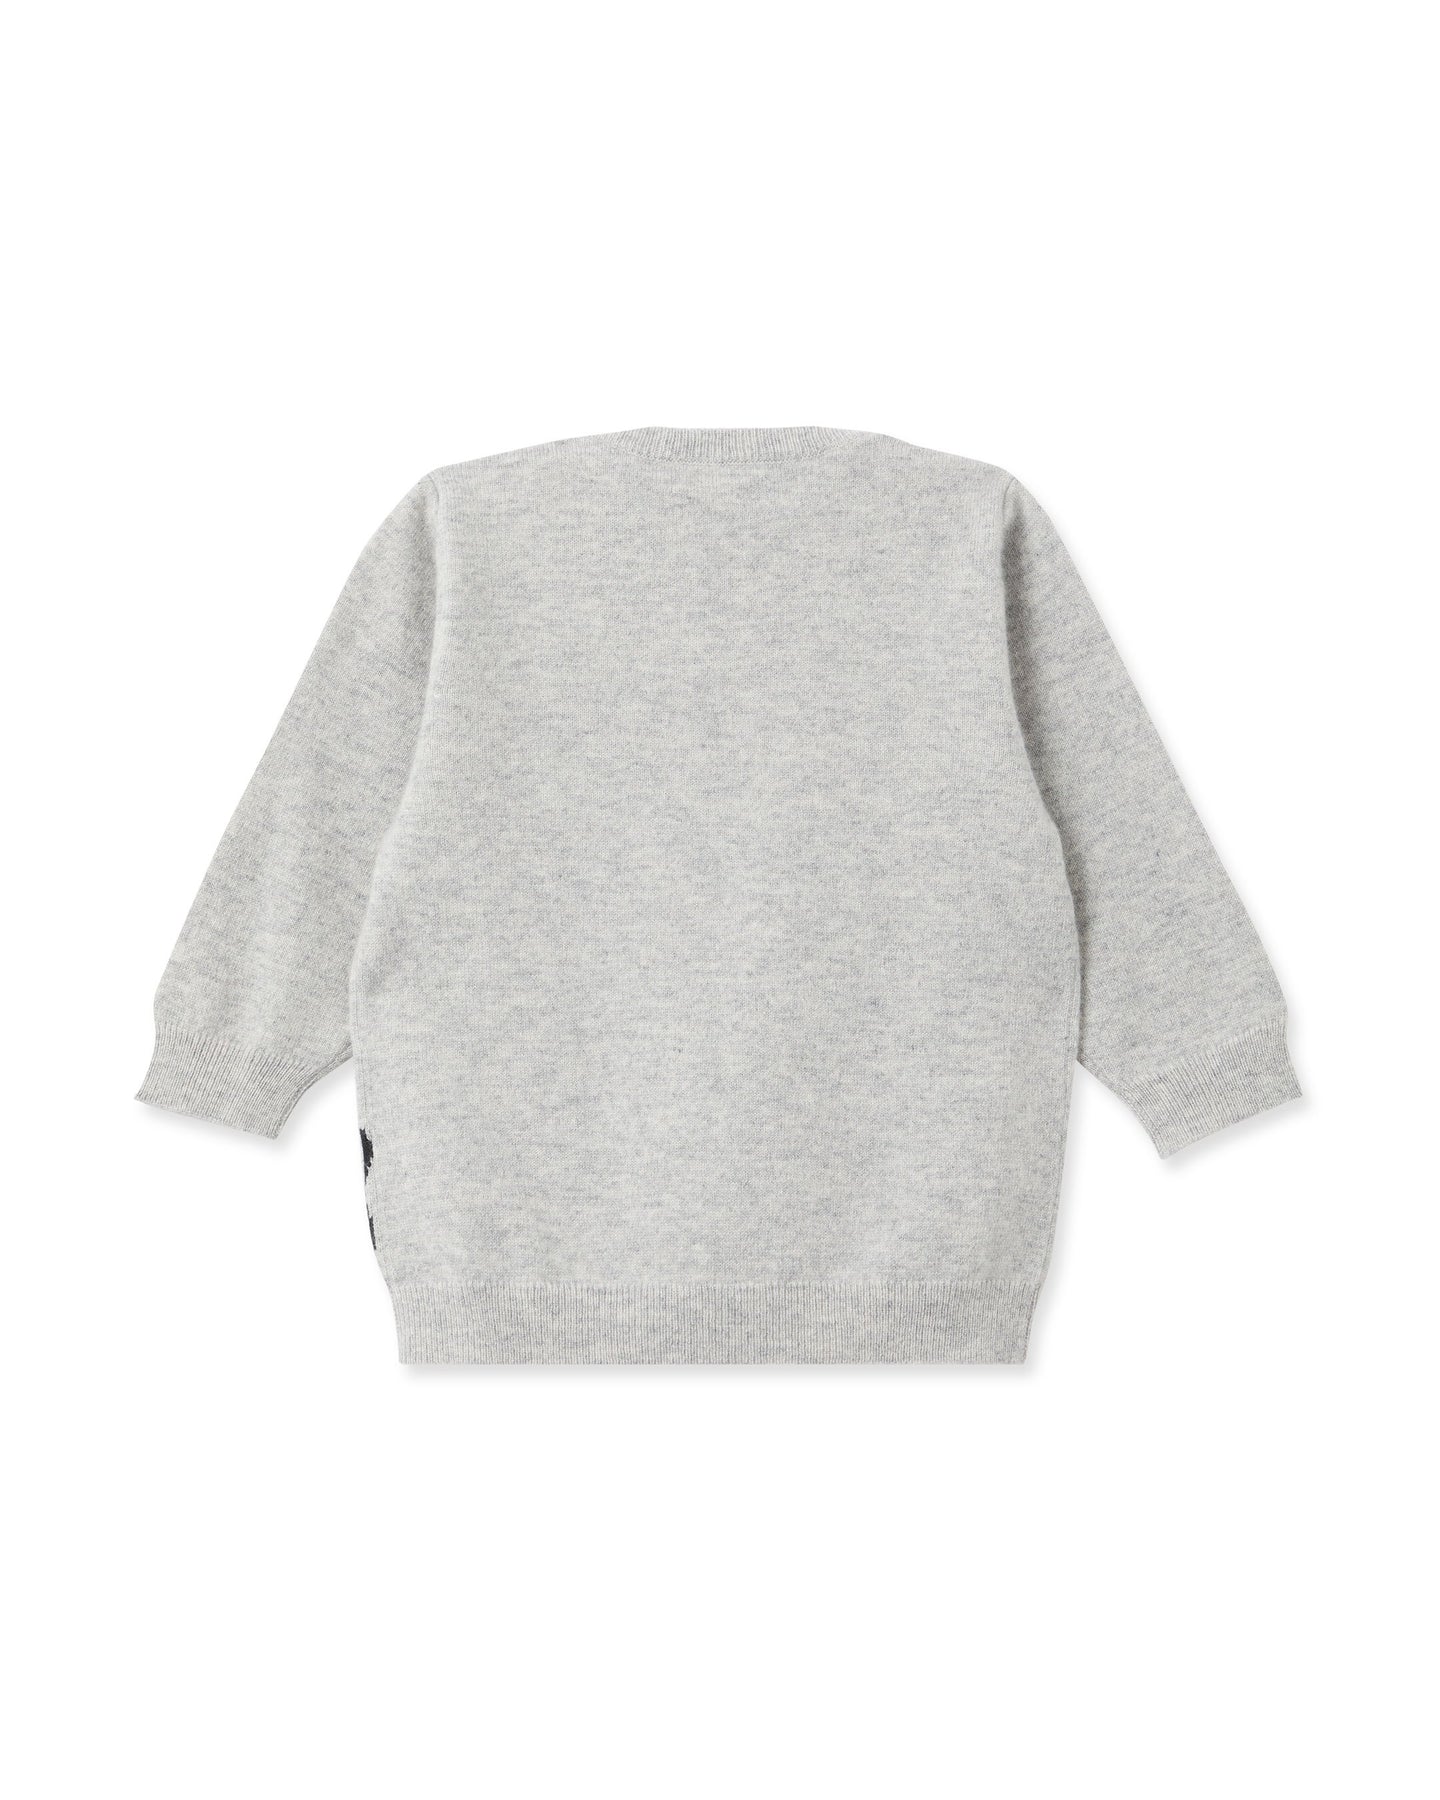 N.Peal Panda Cashmere Sweater Fumo Grey New Ivory White Black